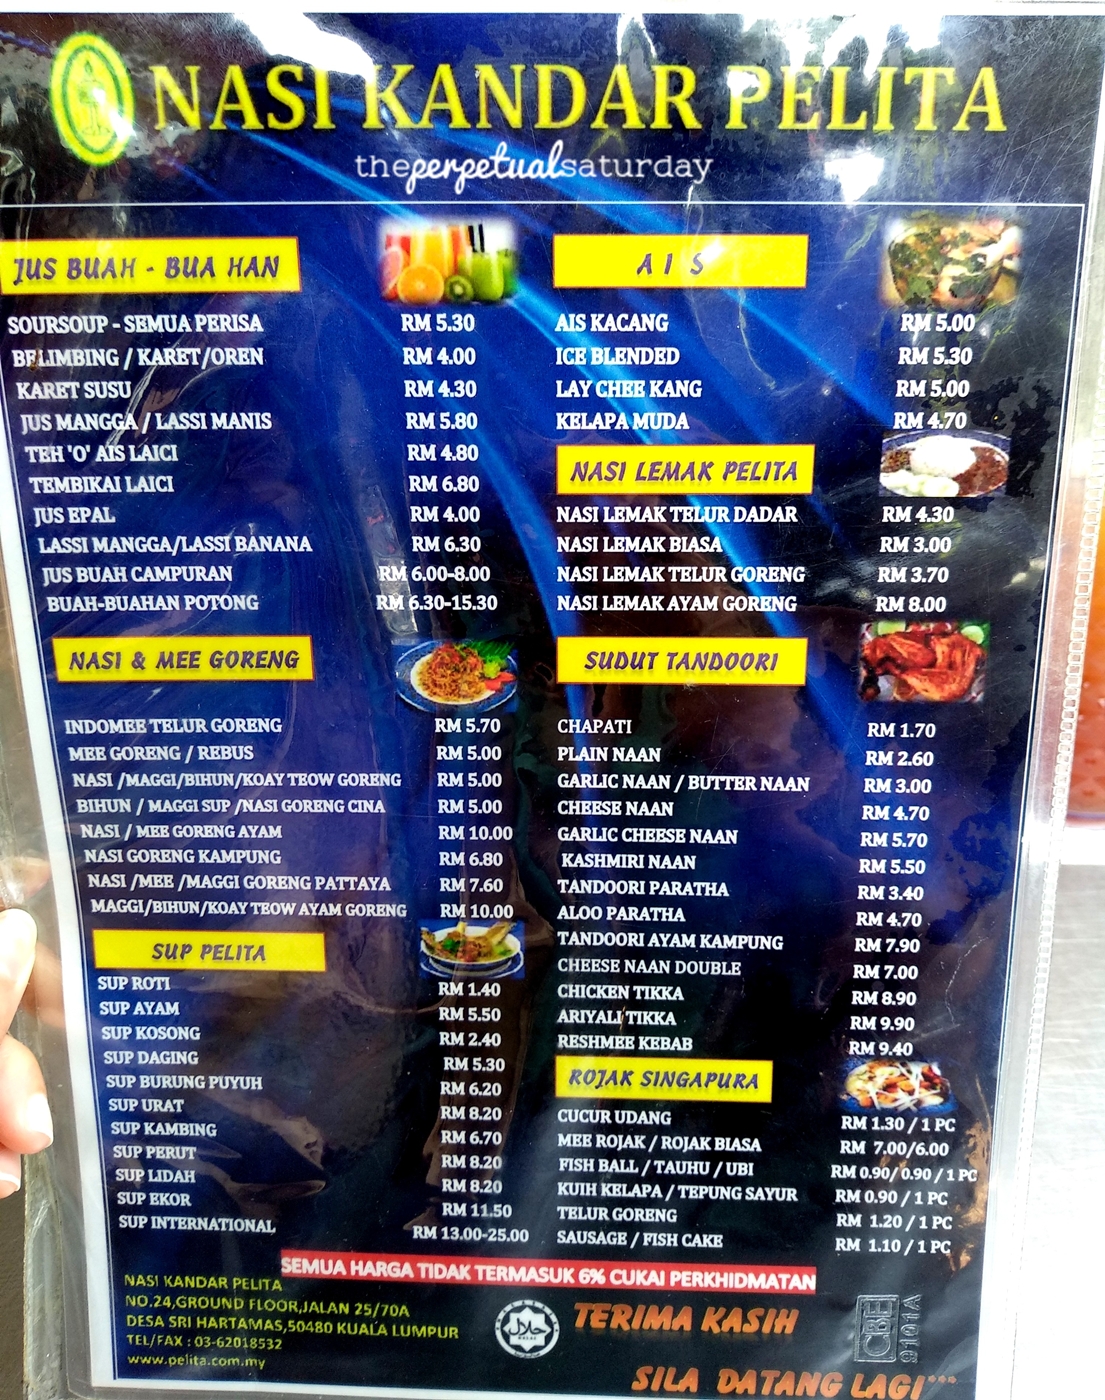 Nasi Kandar Pelita menu, Pelita Nasi Kandar menu